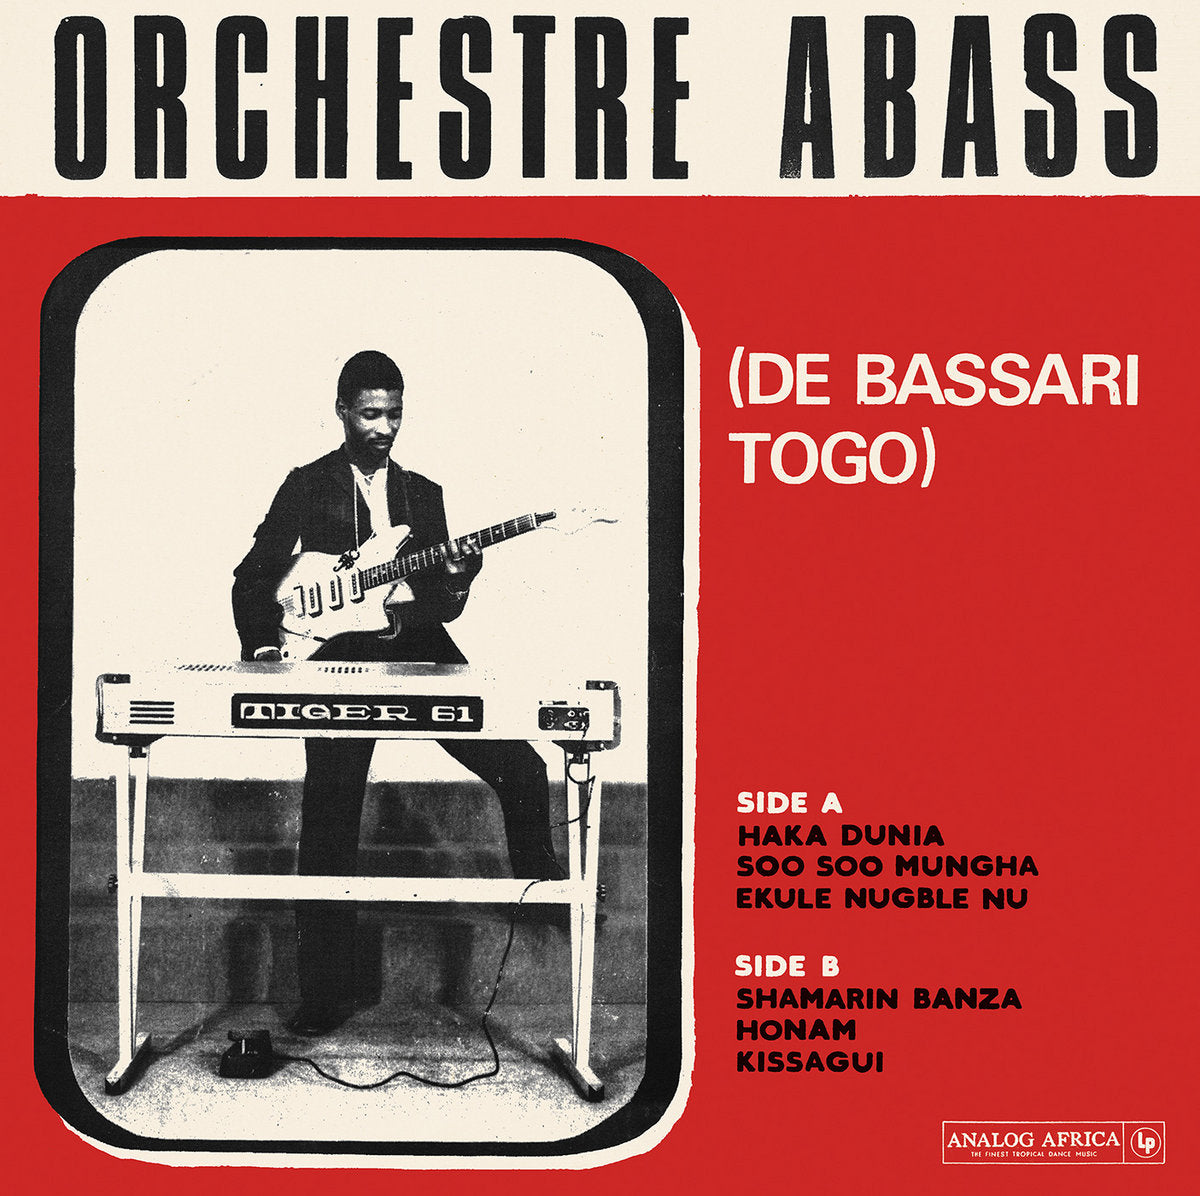 Orchestre Abass "Orchestre Abass (De Bassari Togo)"